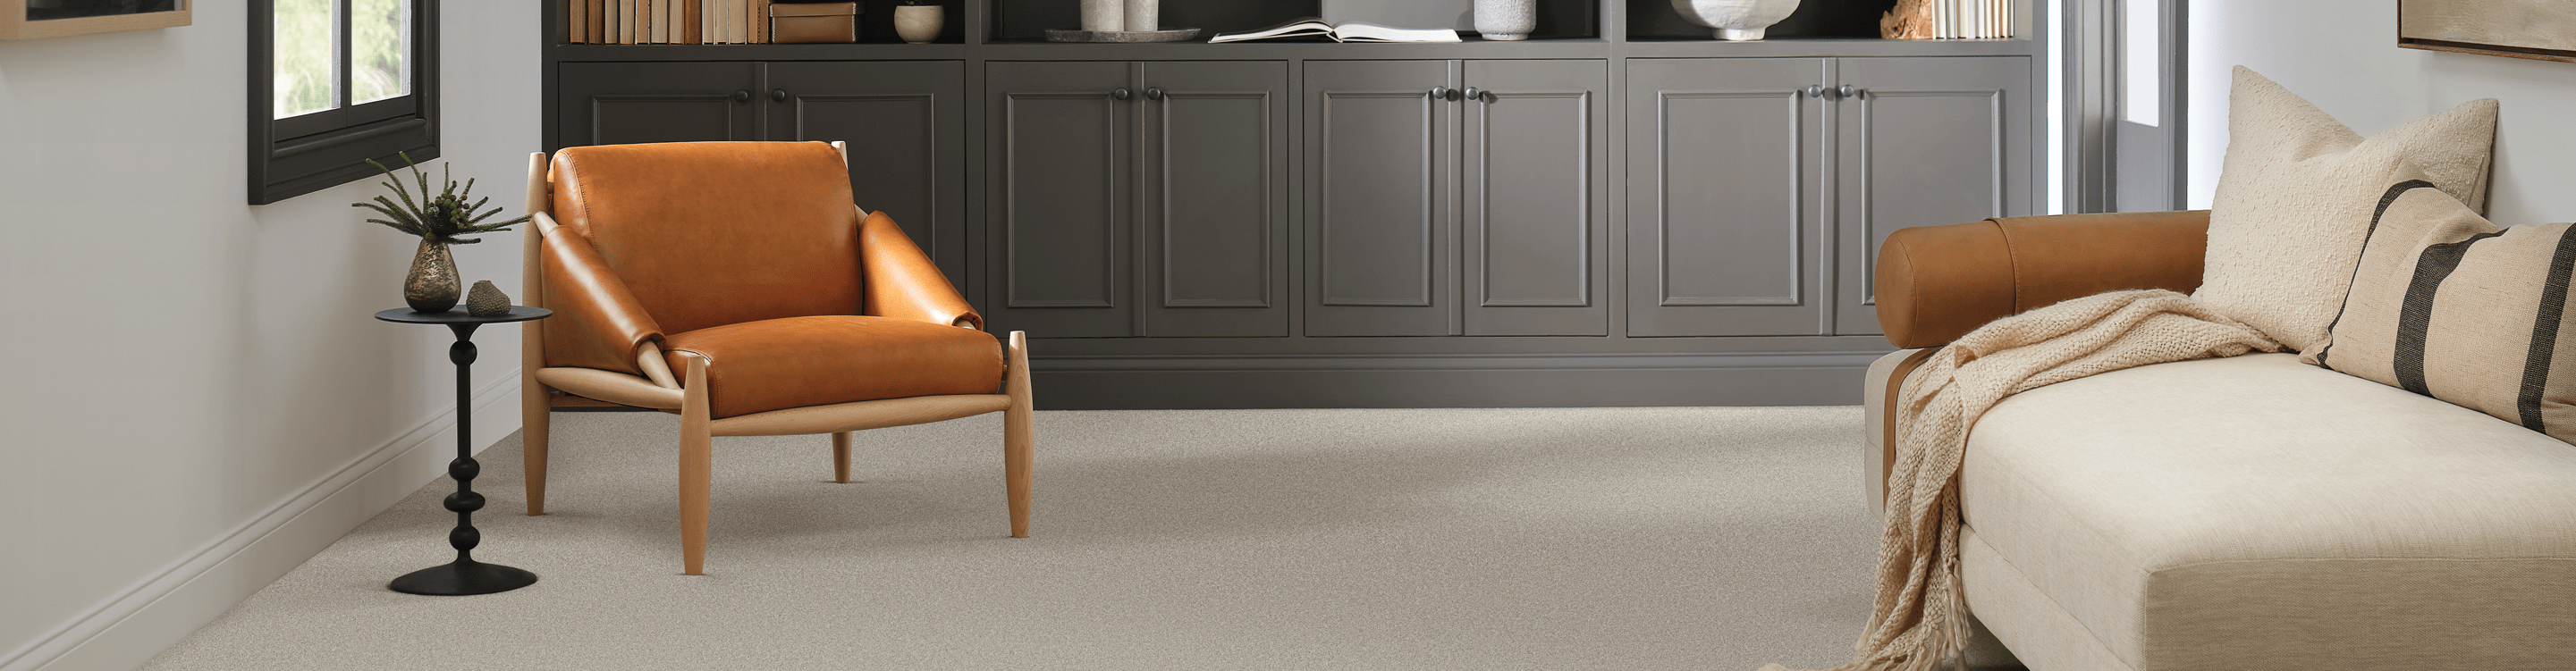 carpet flooring in a study